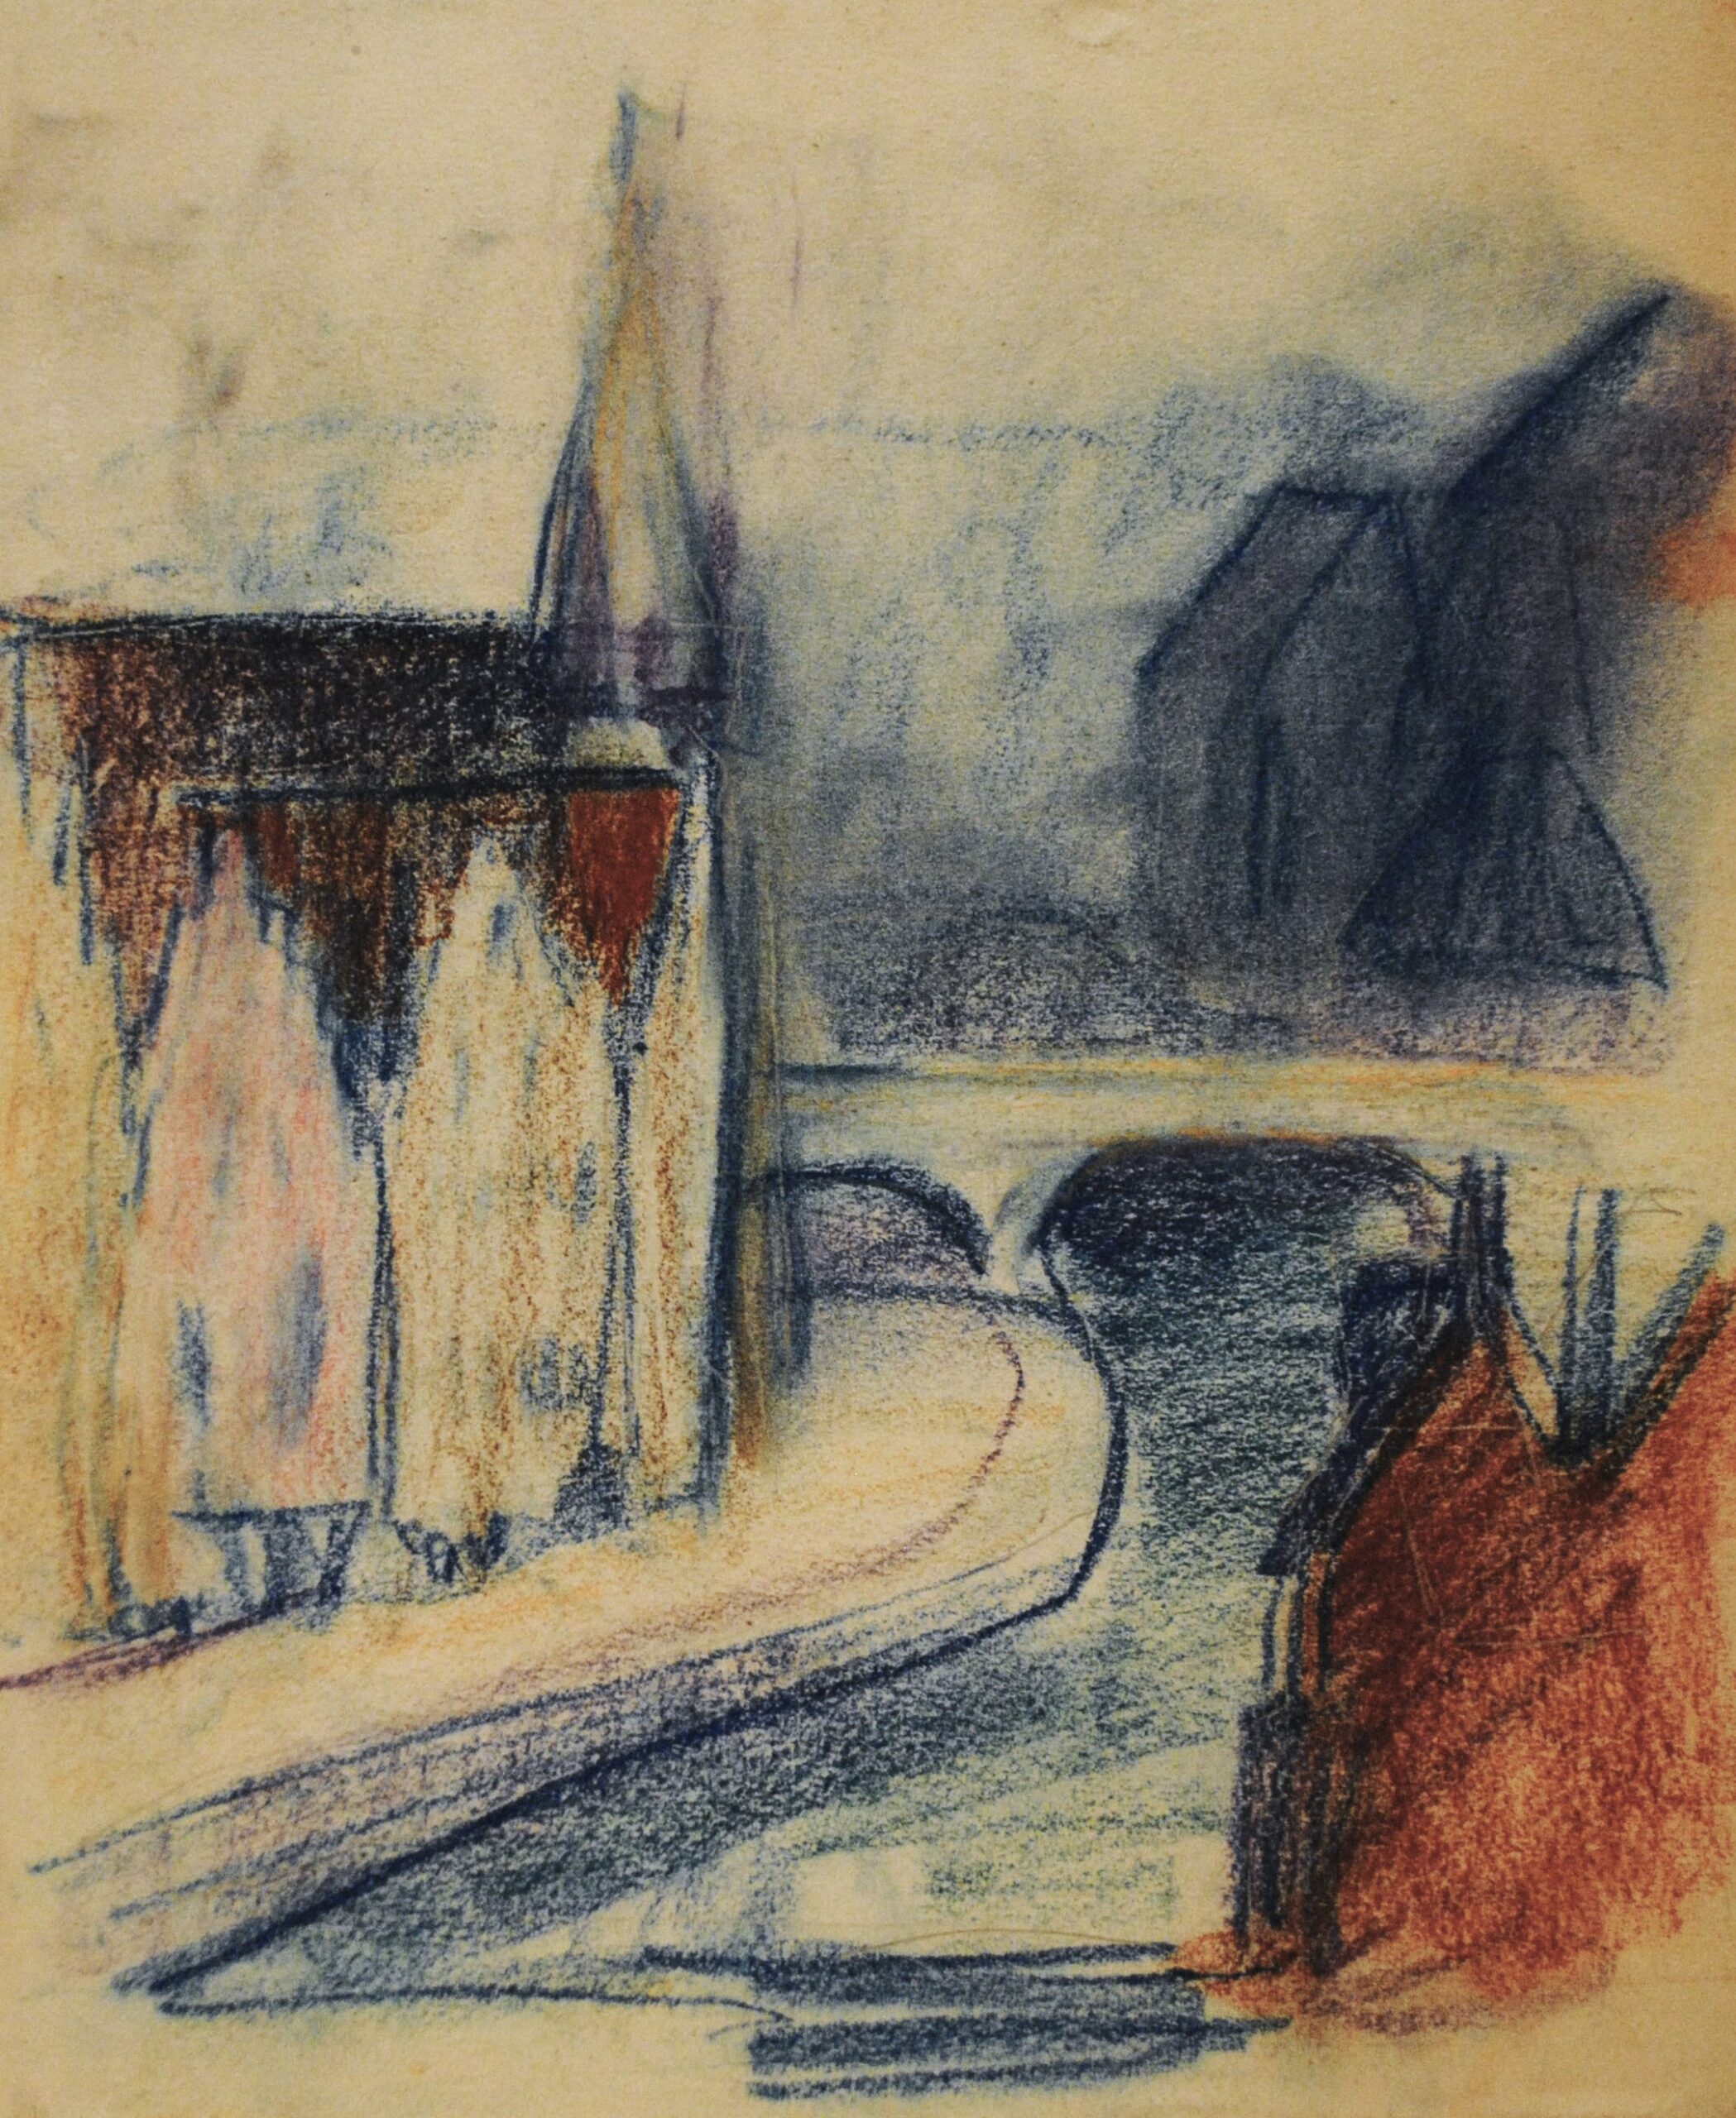 Dibujo de José Manaut titulado Río Sena, París, 1923. Lápiz sobre papel.